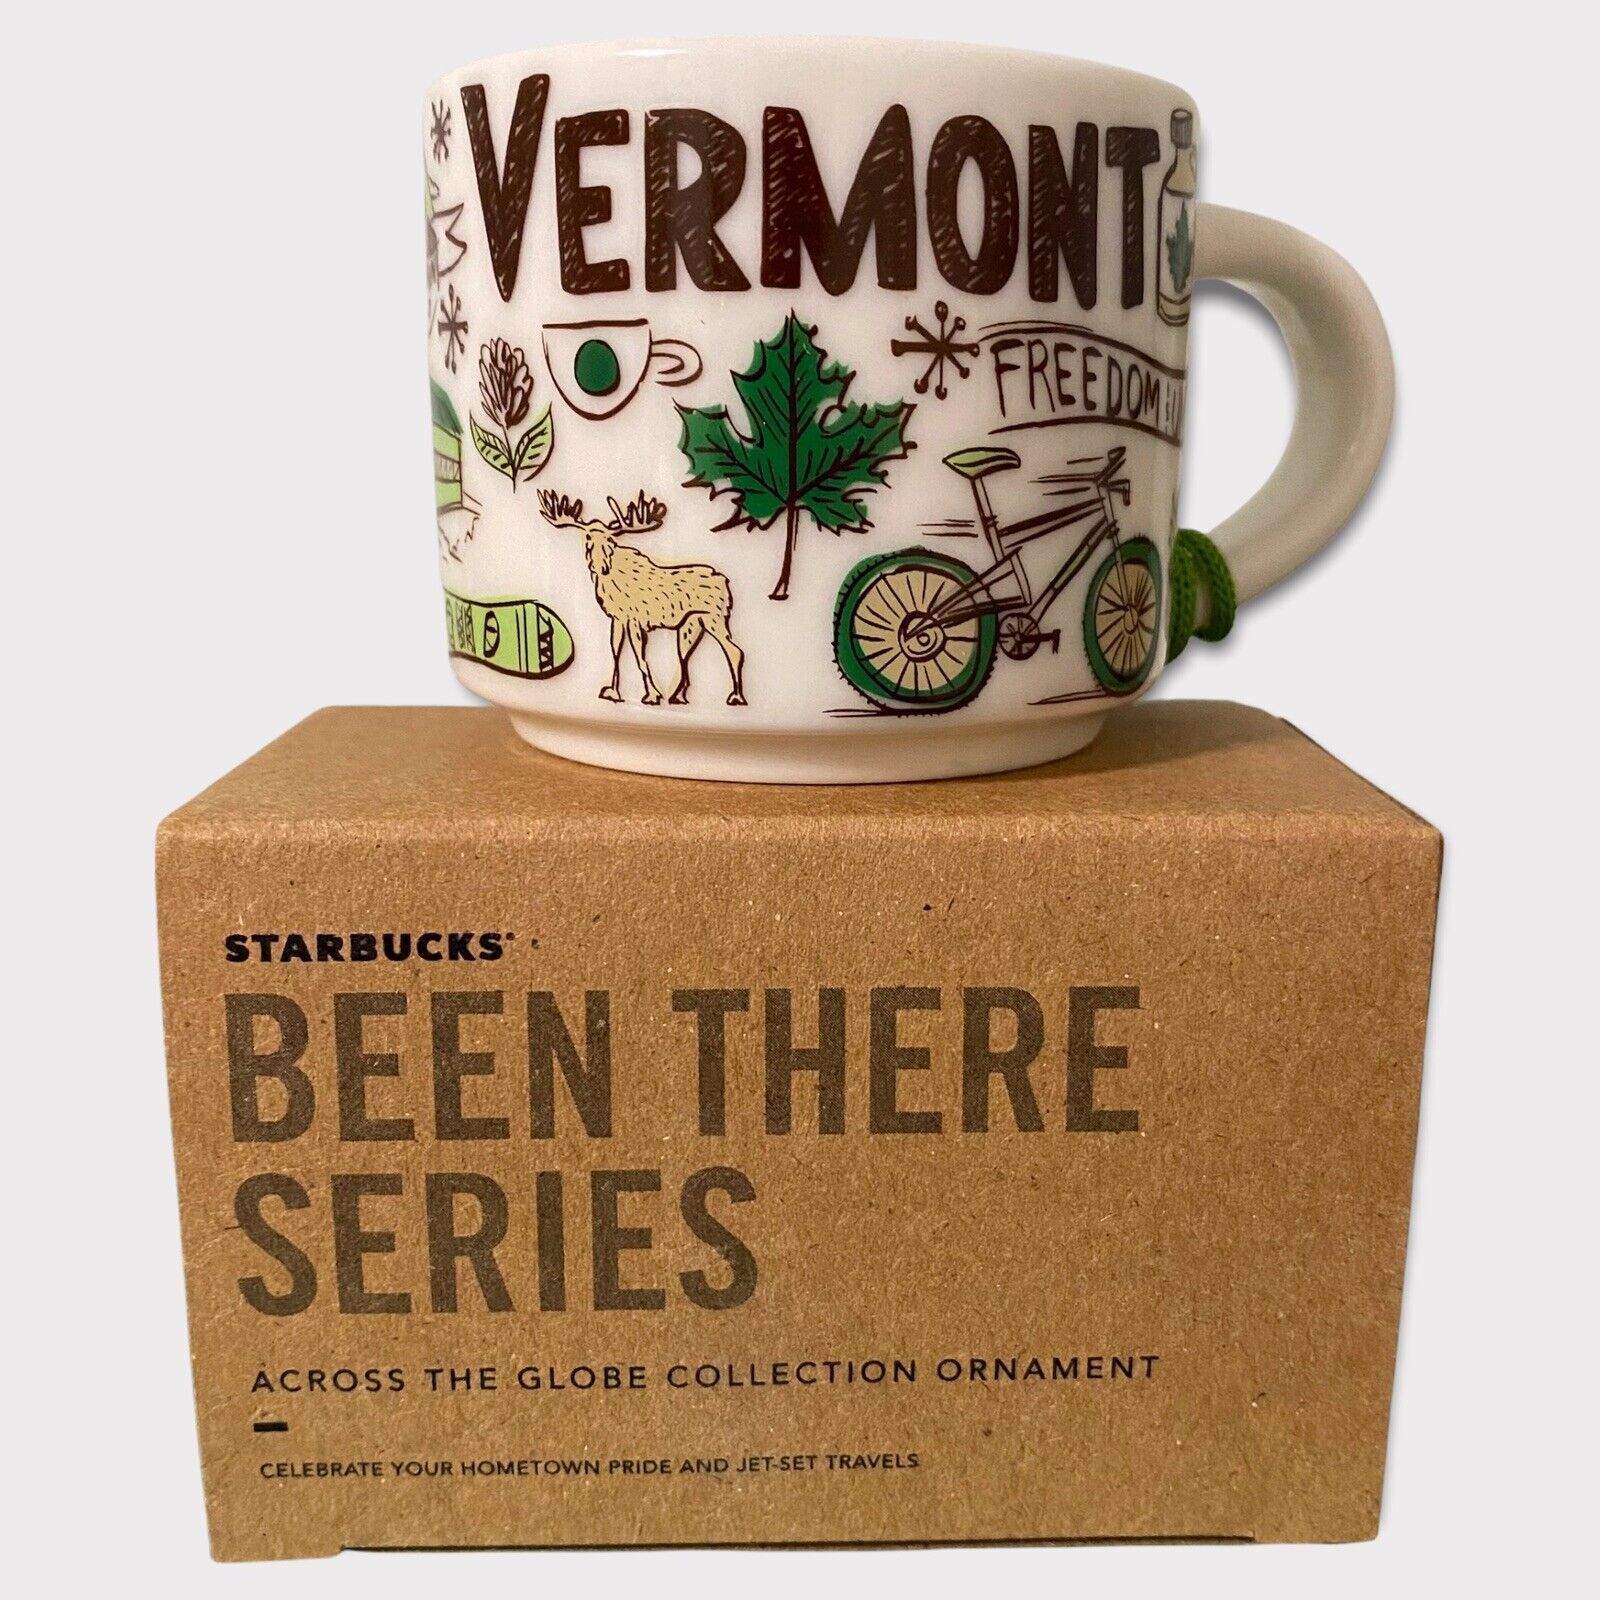 Starbucks Been There Series 2oz Ornament Mug - Vermont VT